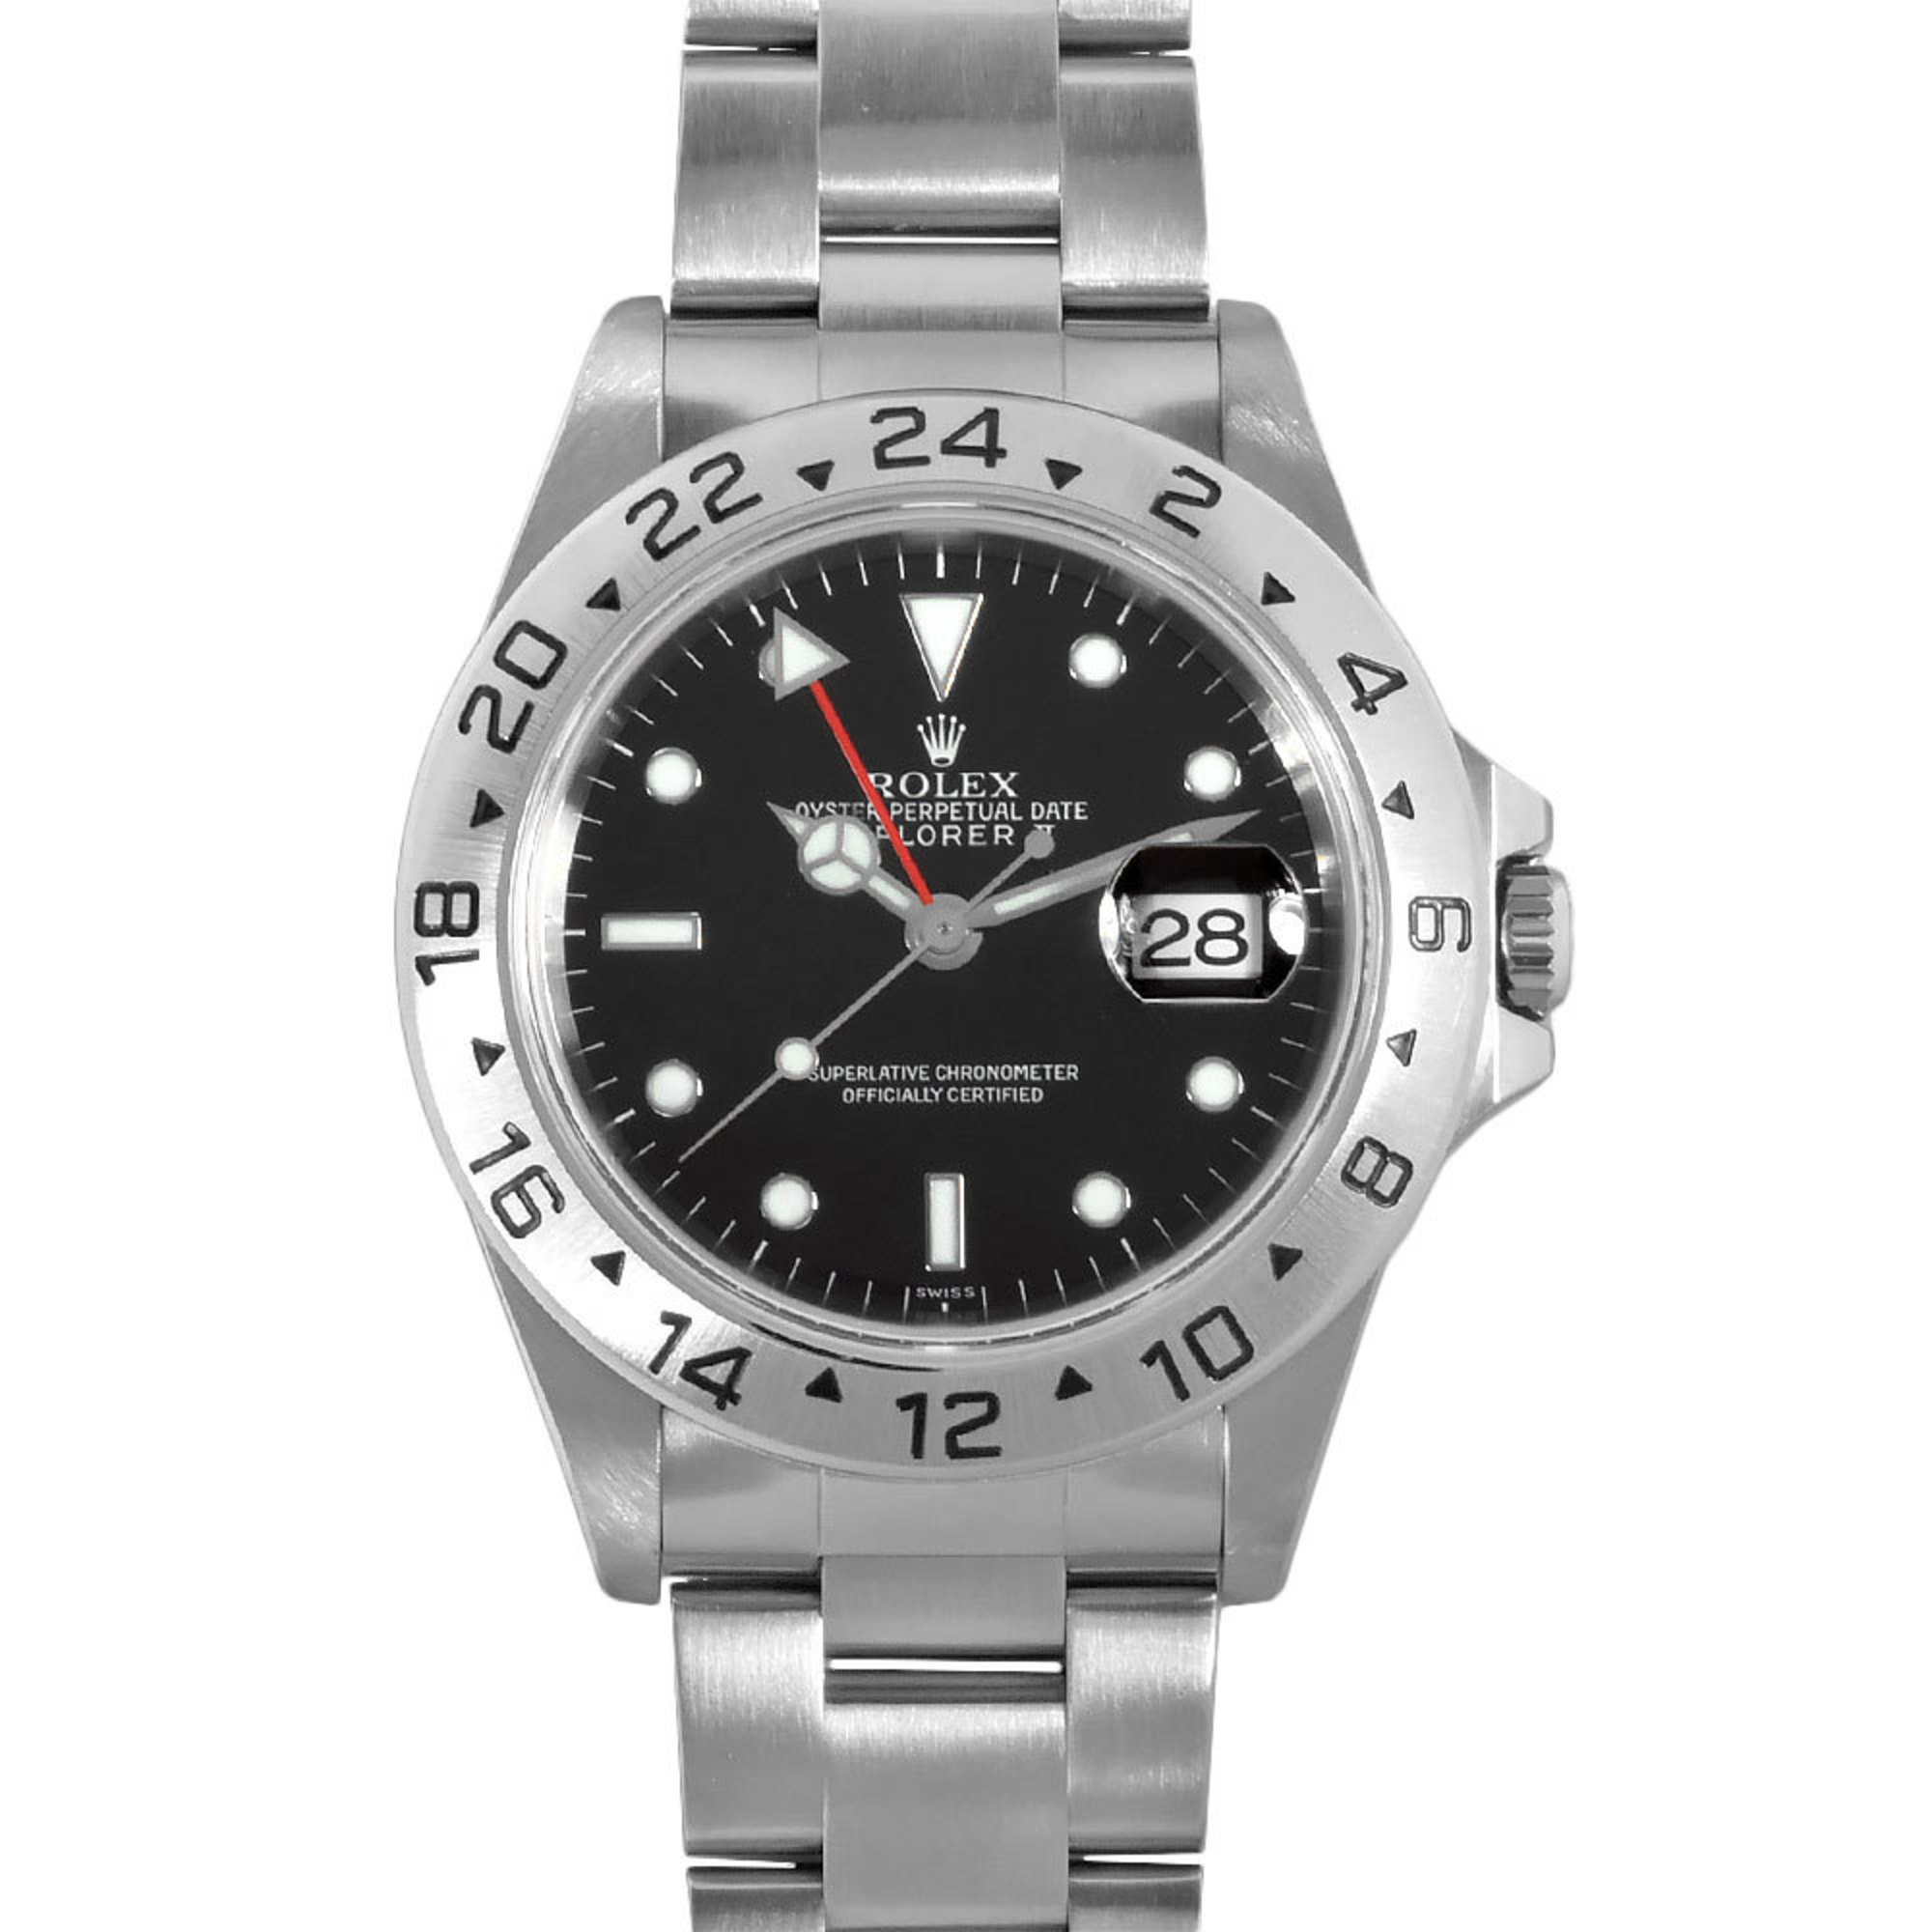 Rolex ROLEX 16570 Explorer II A number watch automatic winding black men's